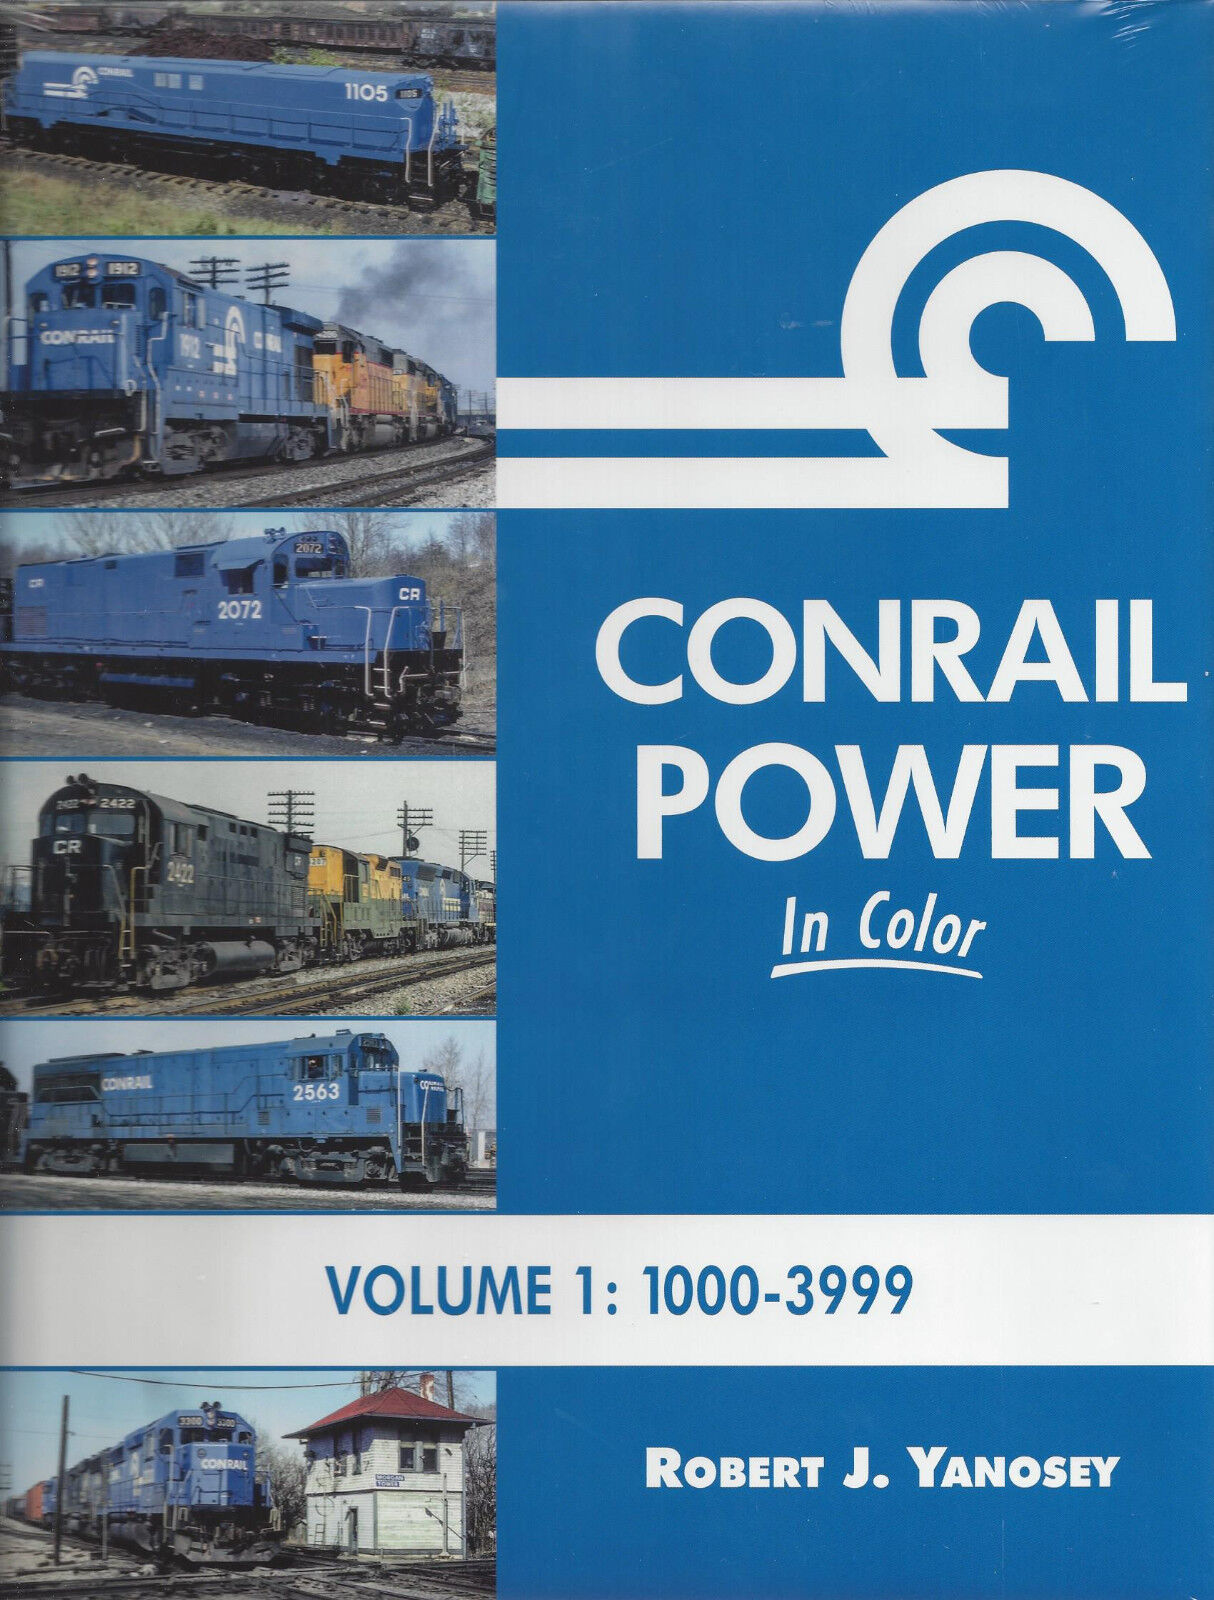 CONRAIL POWER in Color, Vol. 1: 1000 - 3999 Series -- (BRAND NEW BOOK)